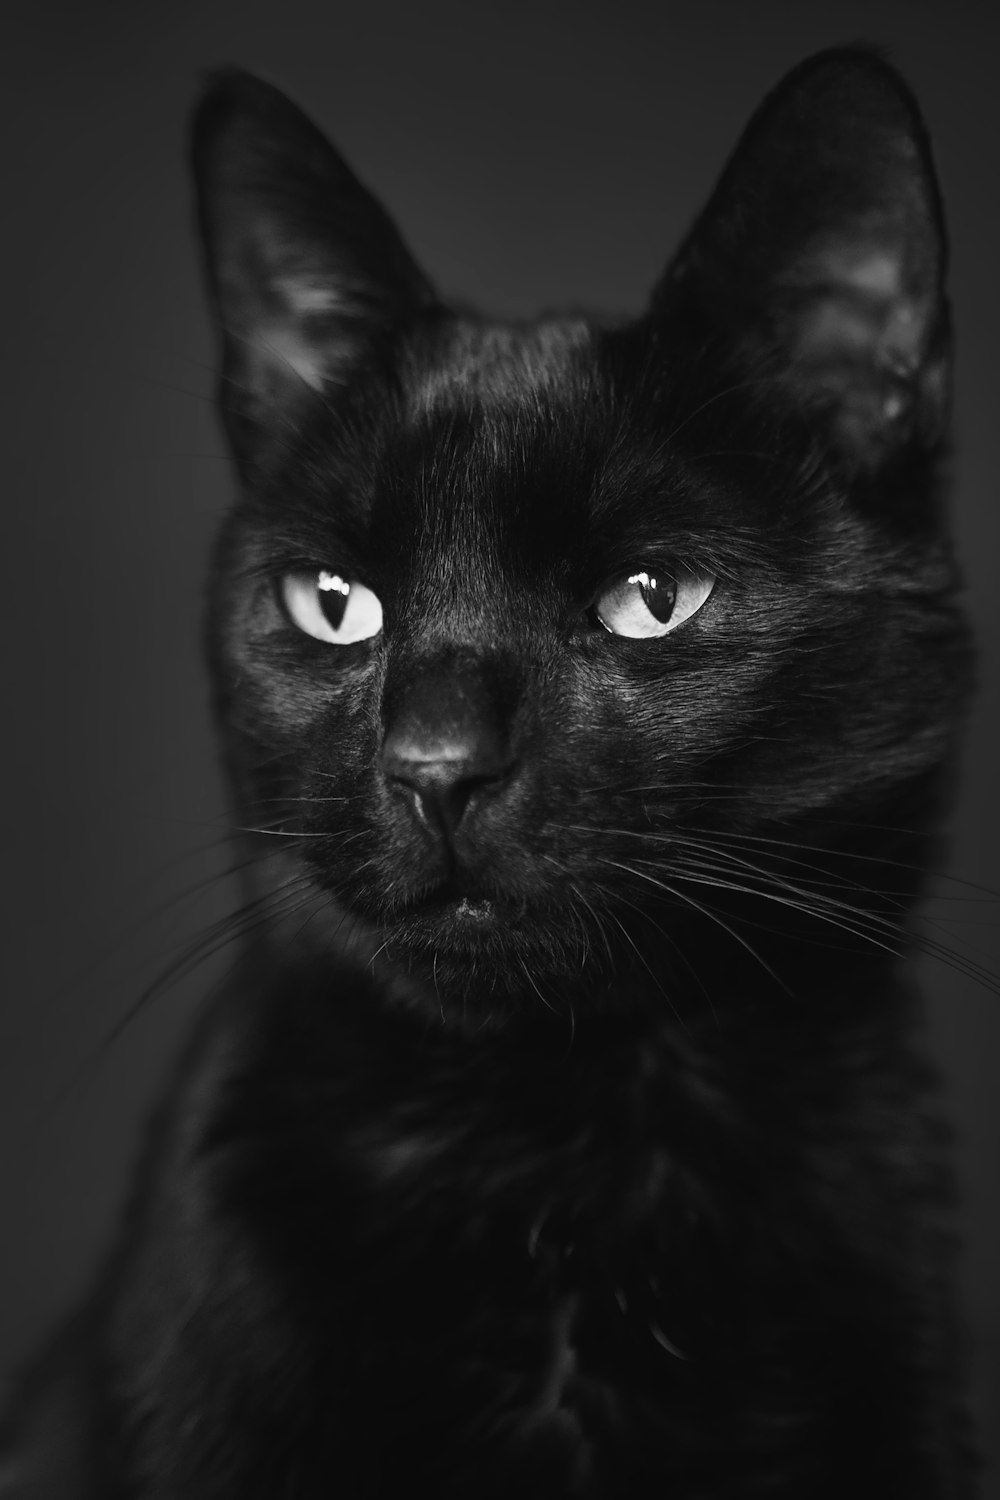 Schwarze Katze in Graustufen